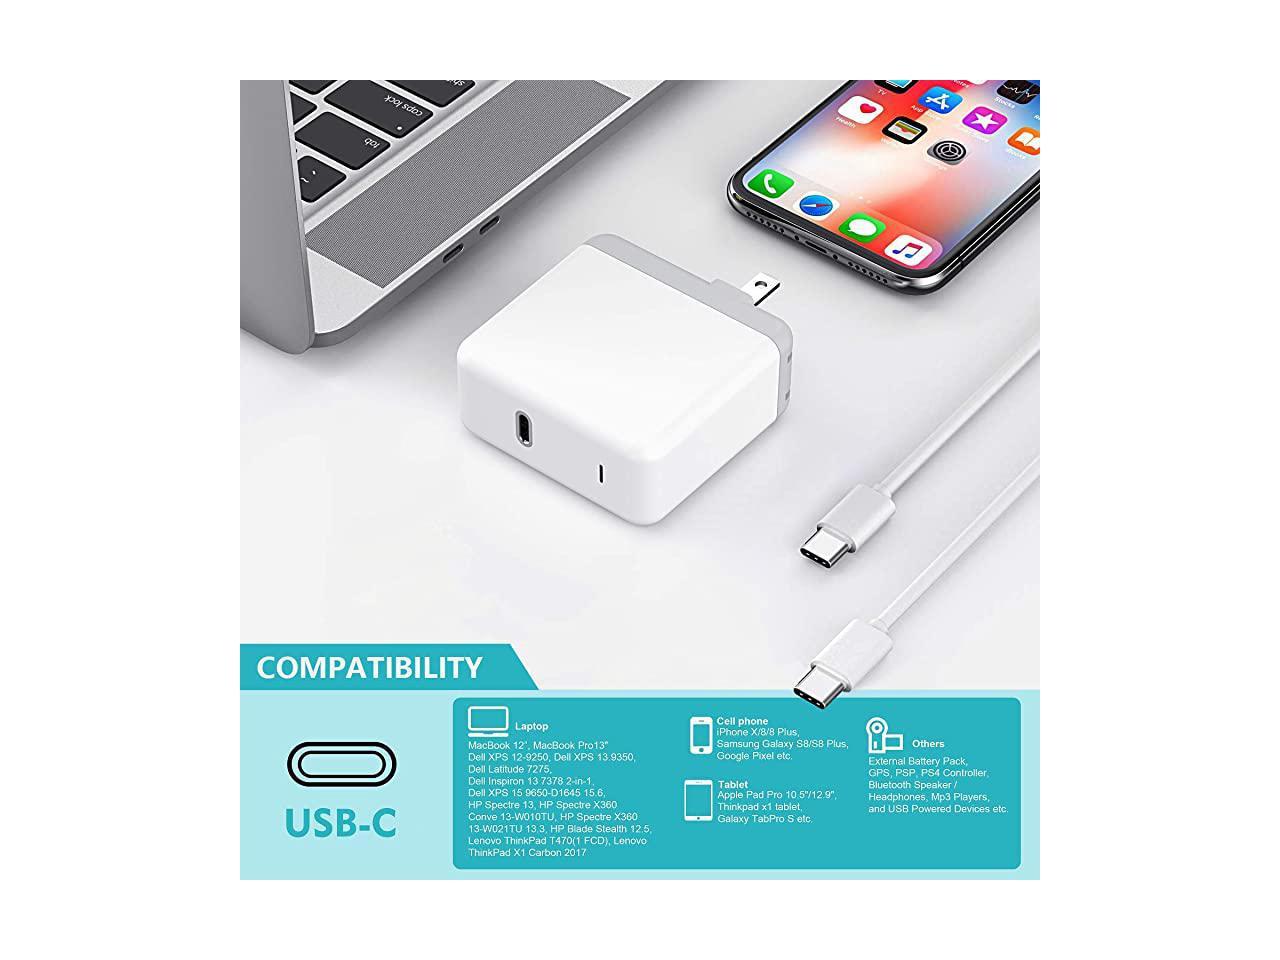 macbook air 13 inch charger watt